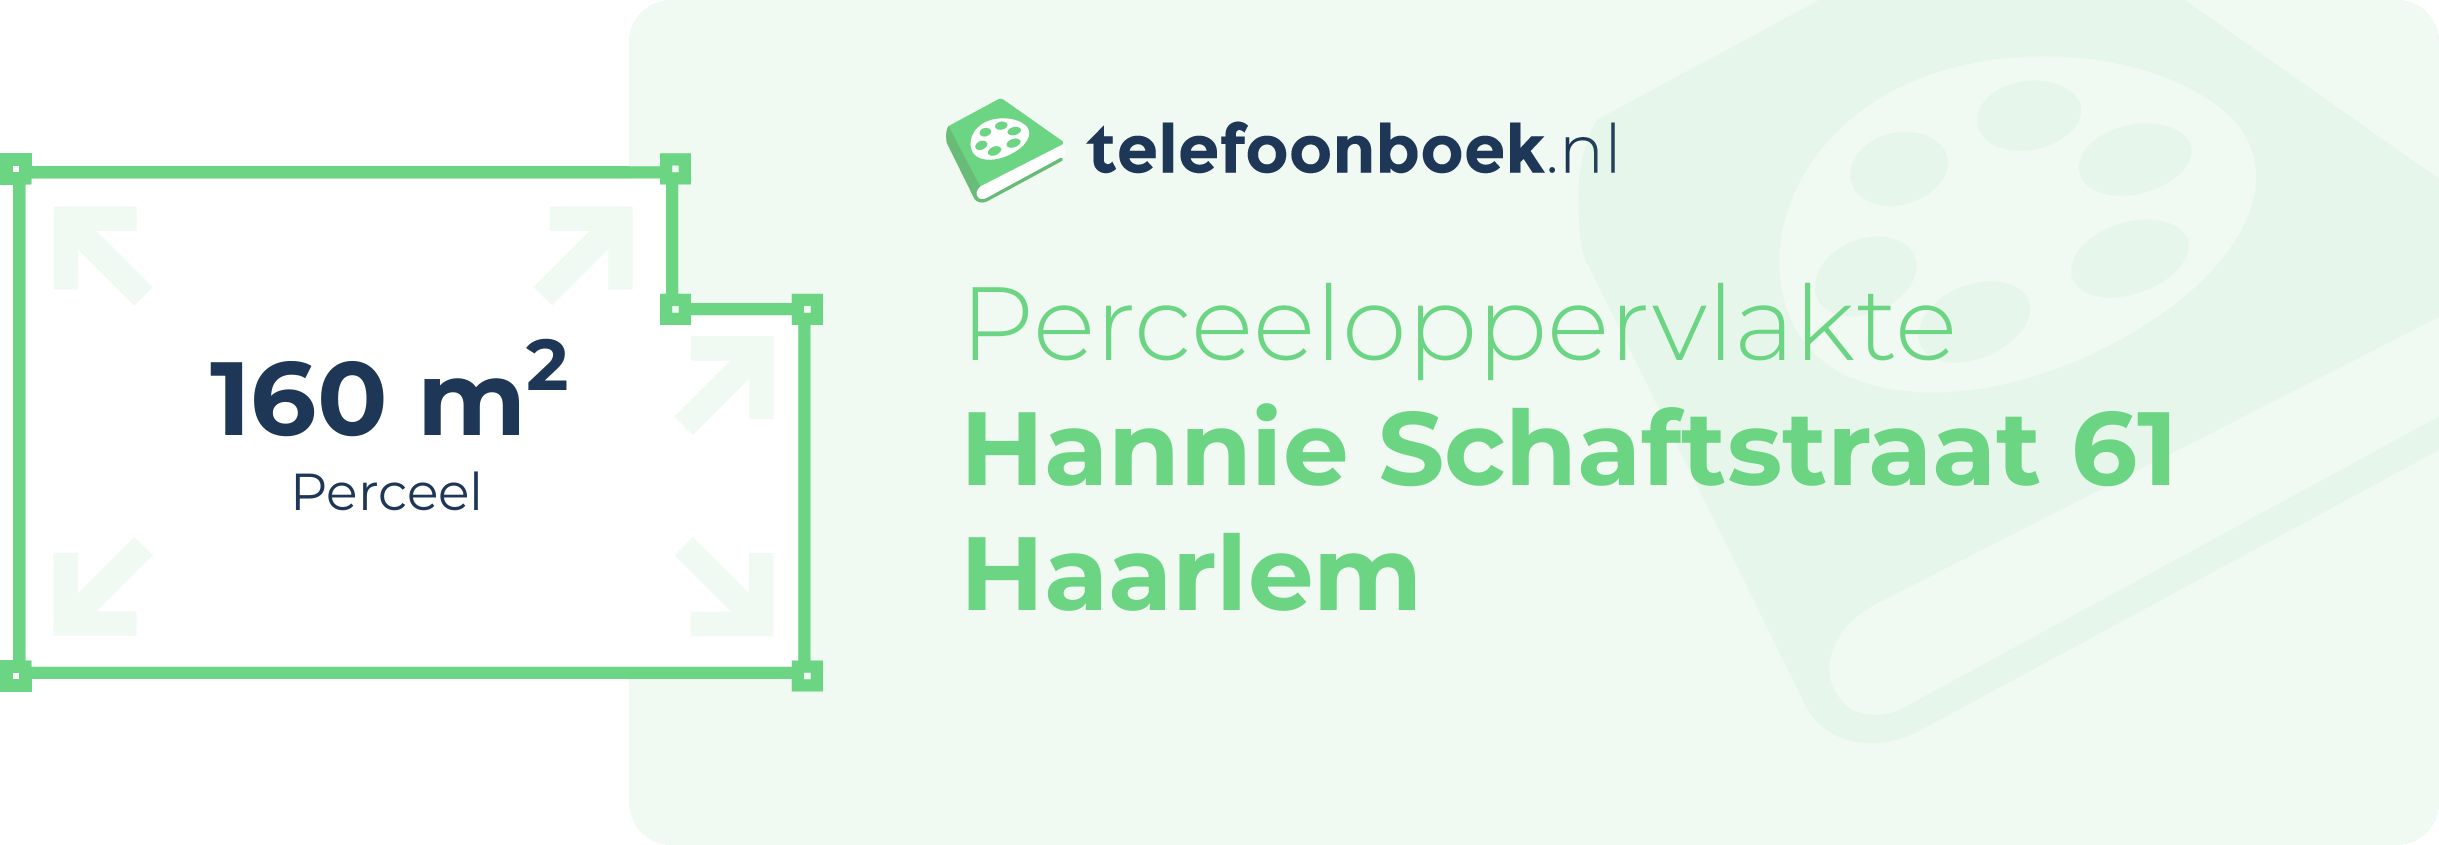 Perceeloppervlakte Hannie Schaftstraat 61 Haarlem